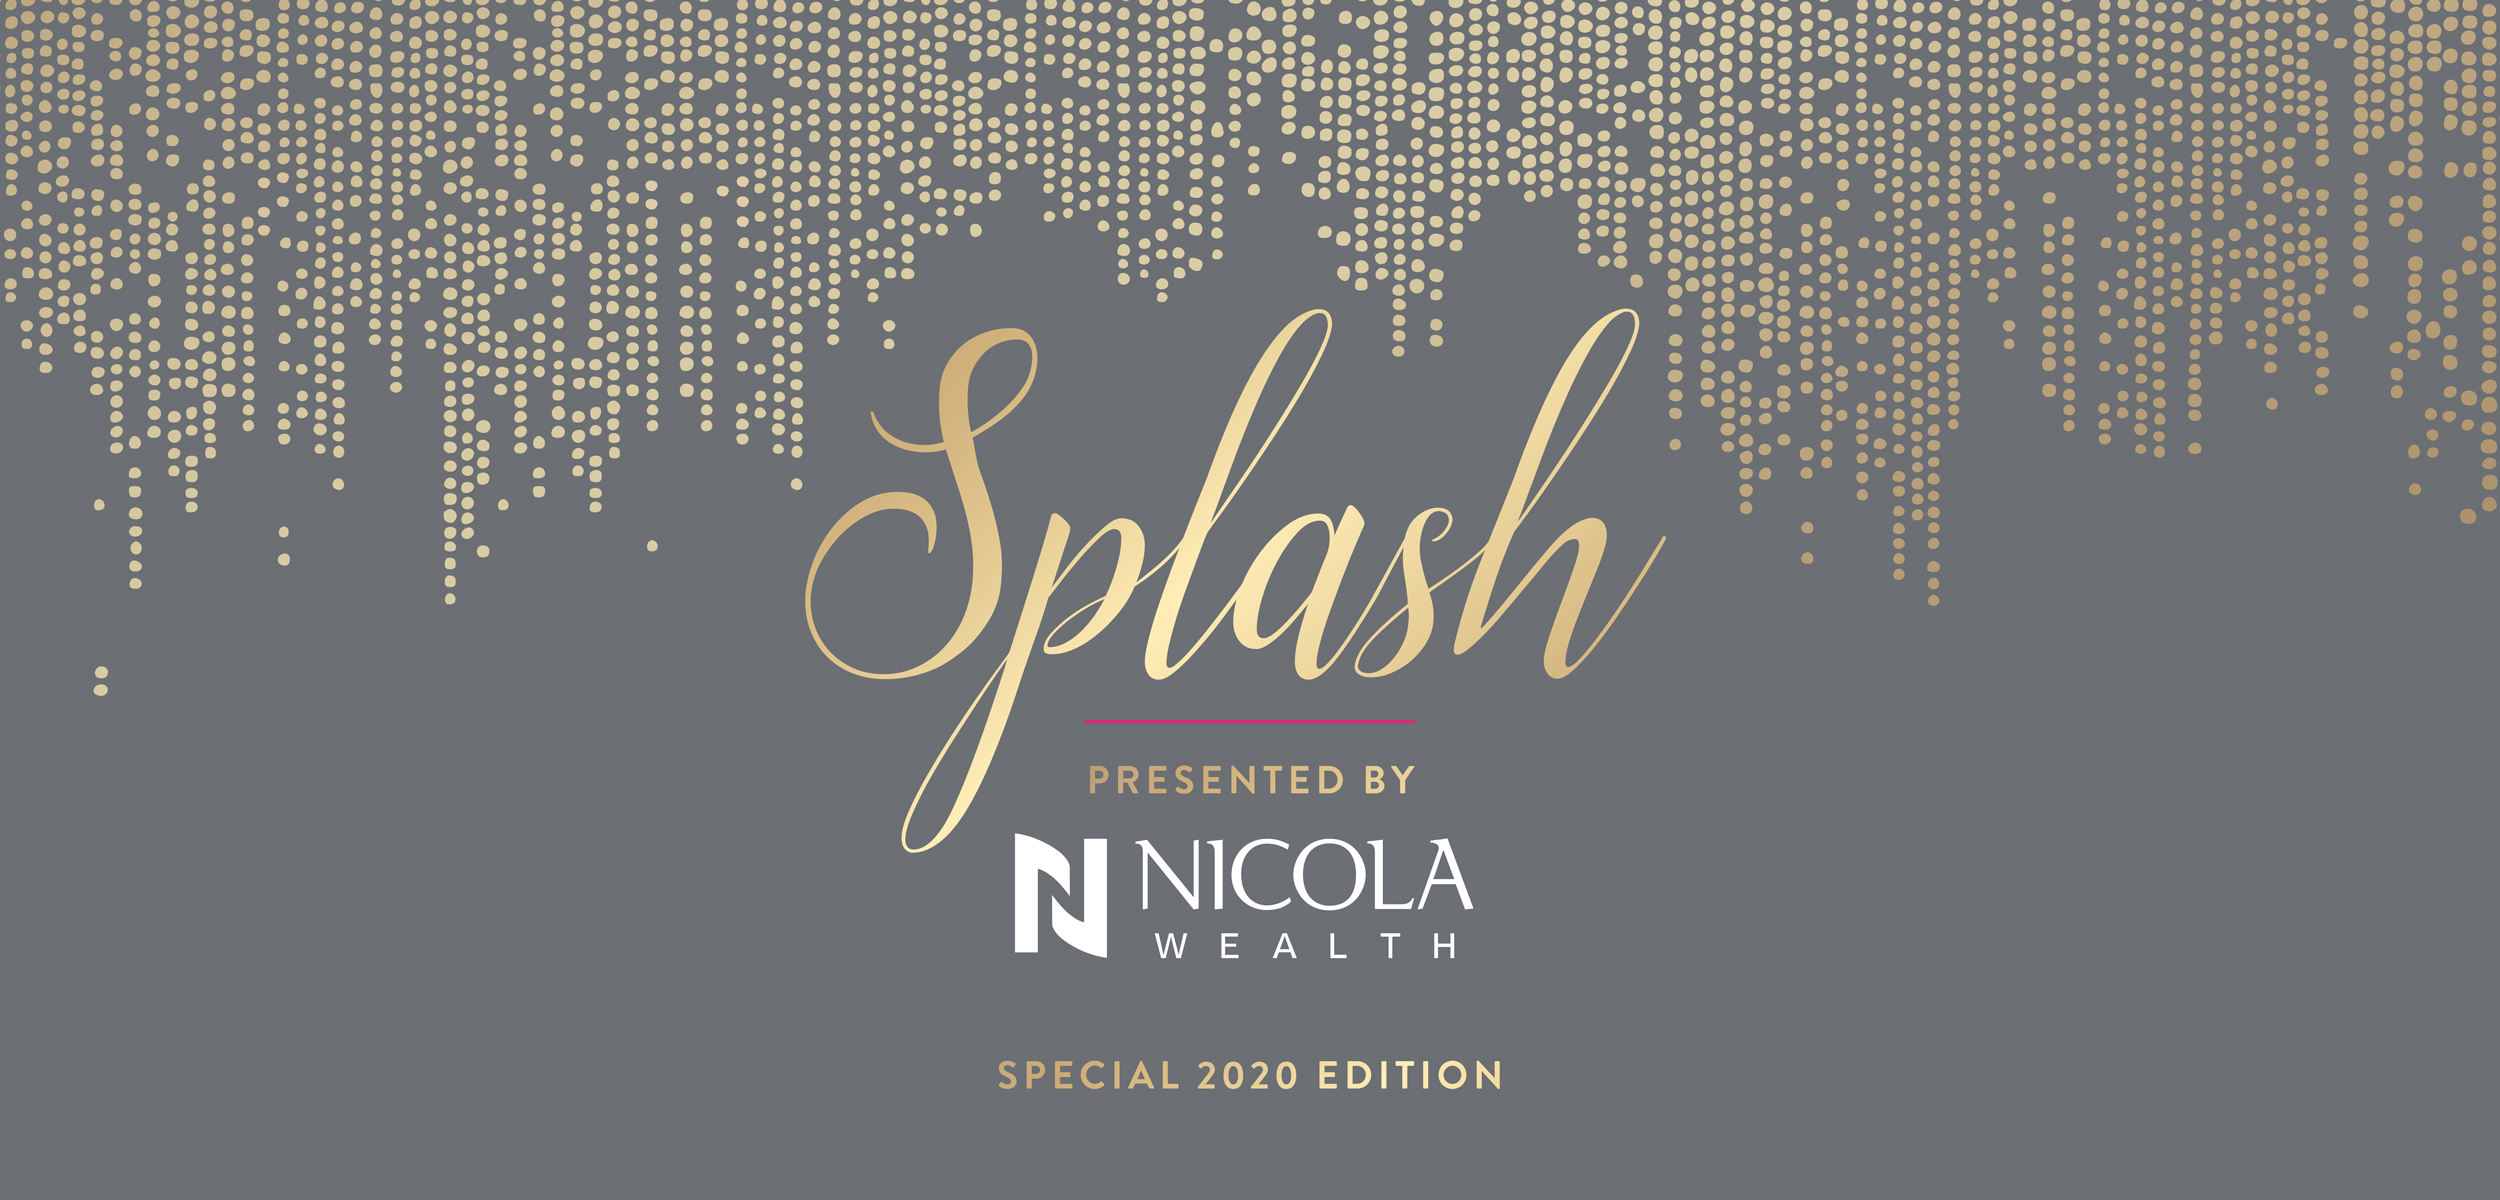 Splash Art Auction & Gala